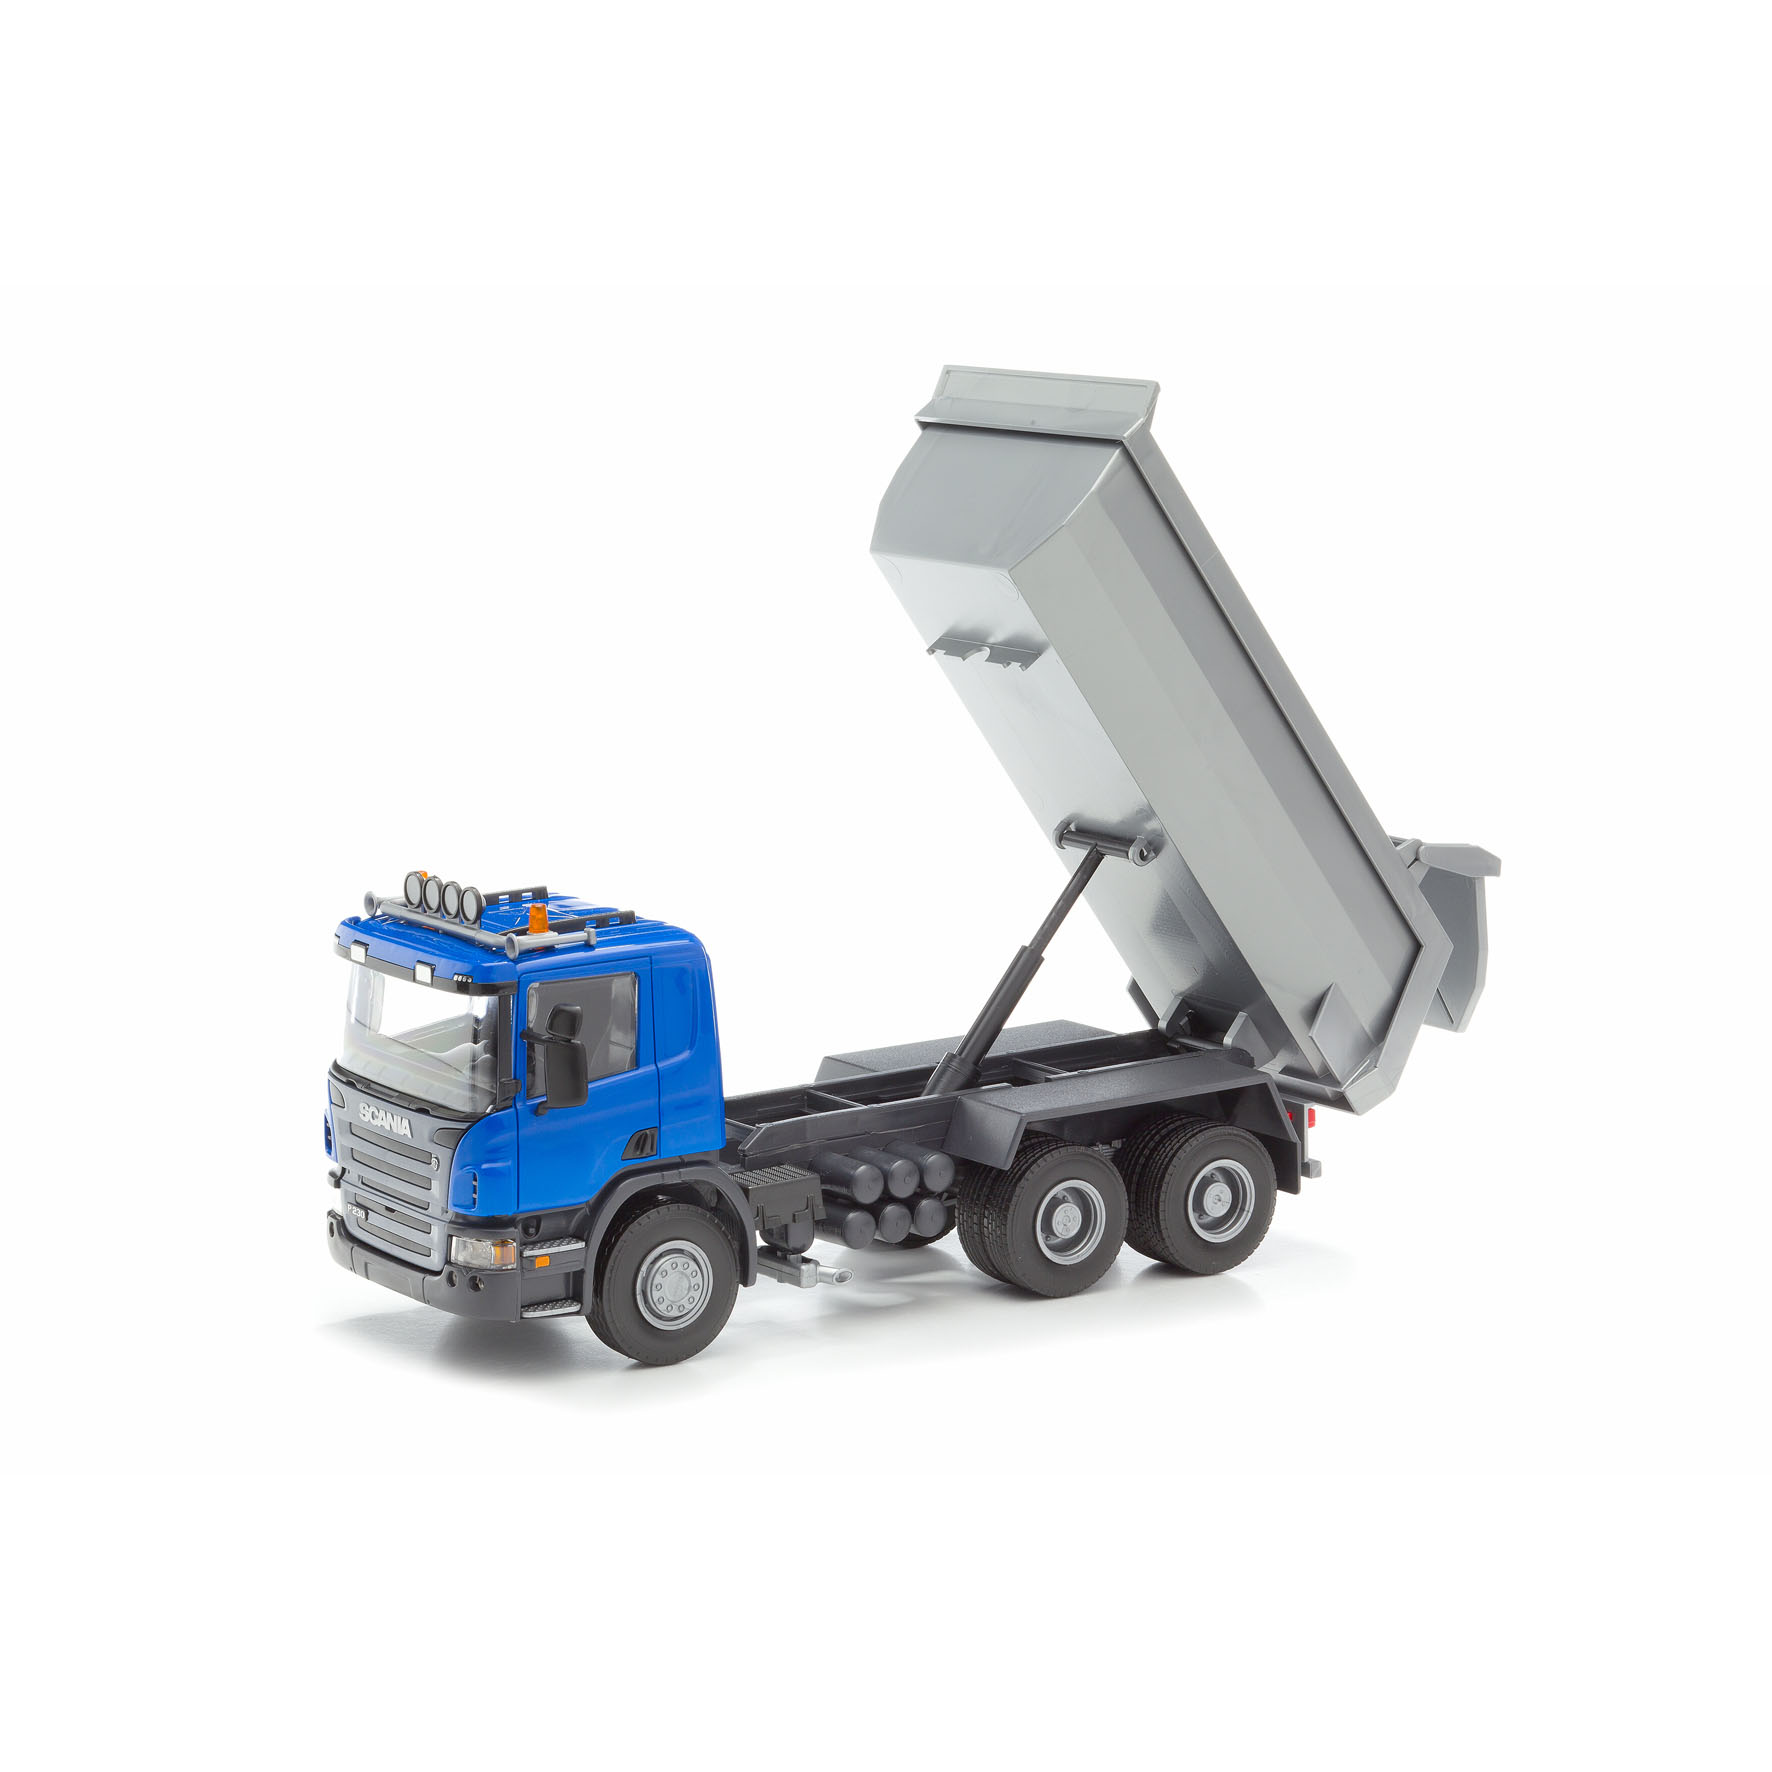 Emek emek toy car waste truck scania 3-axle blue 1:25